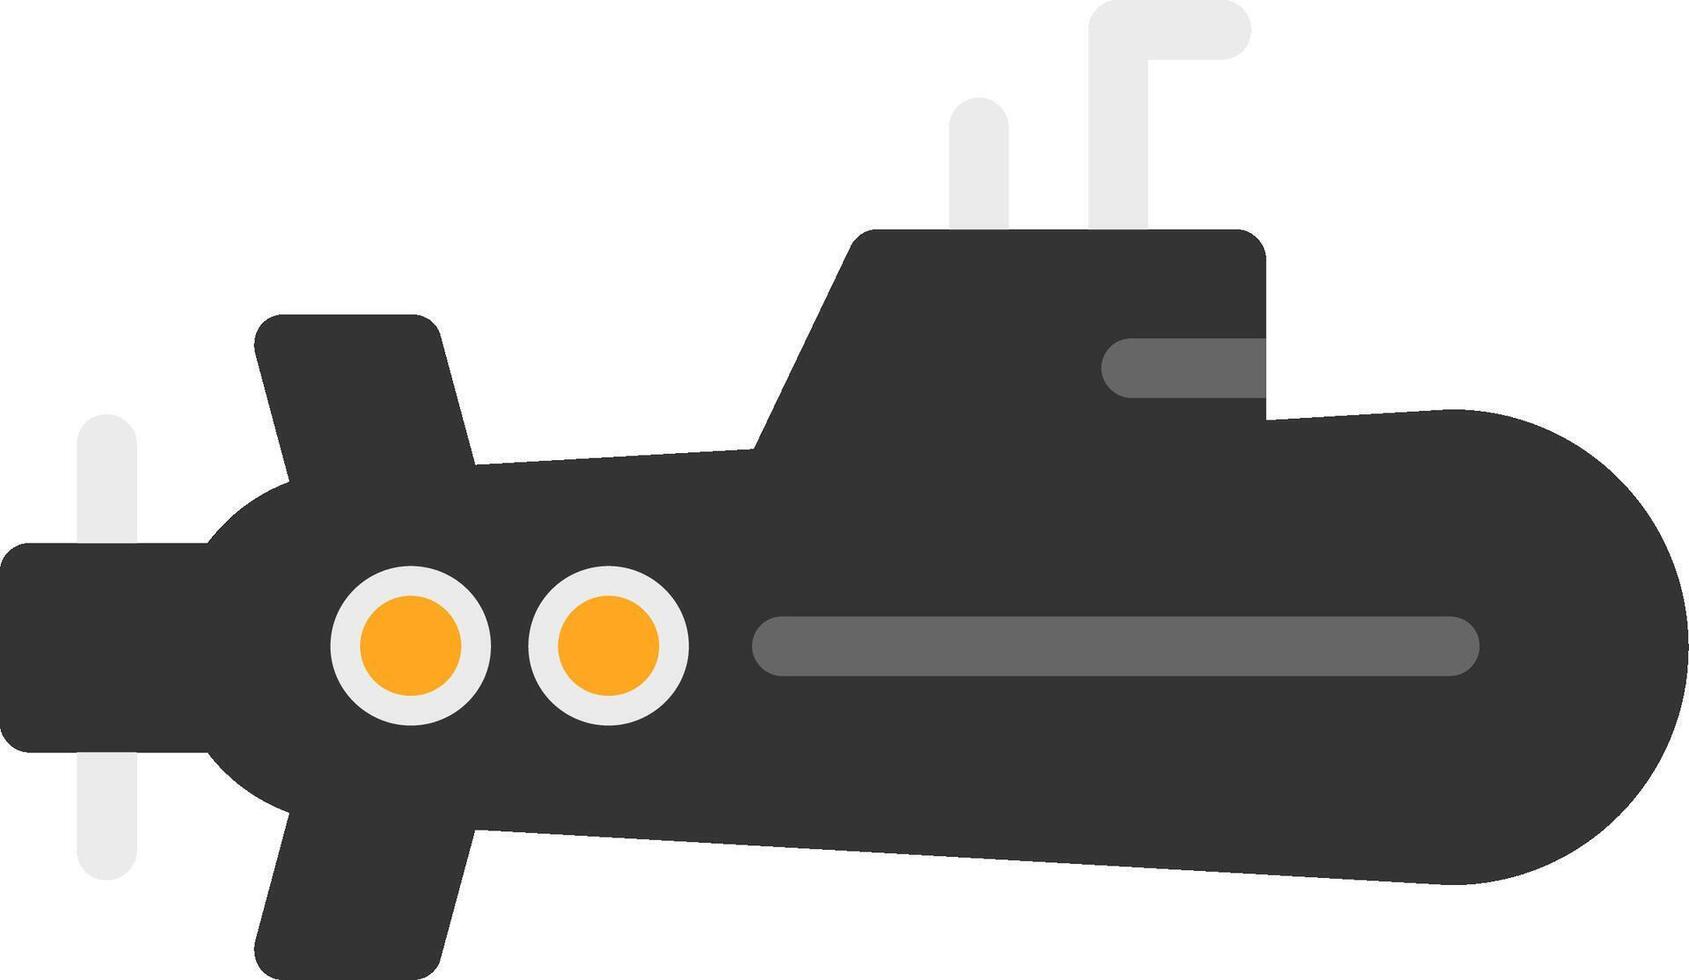 Submarine Flat Icon vector